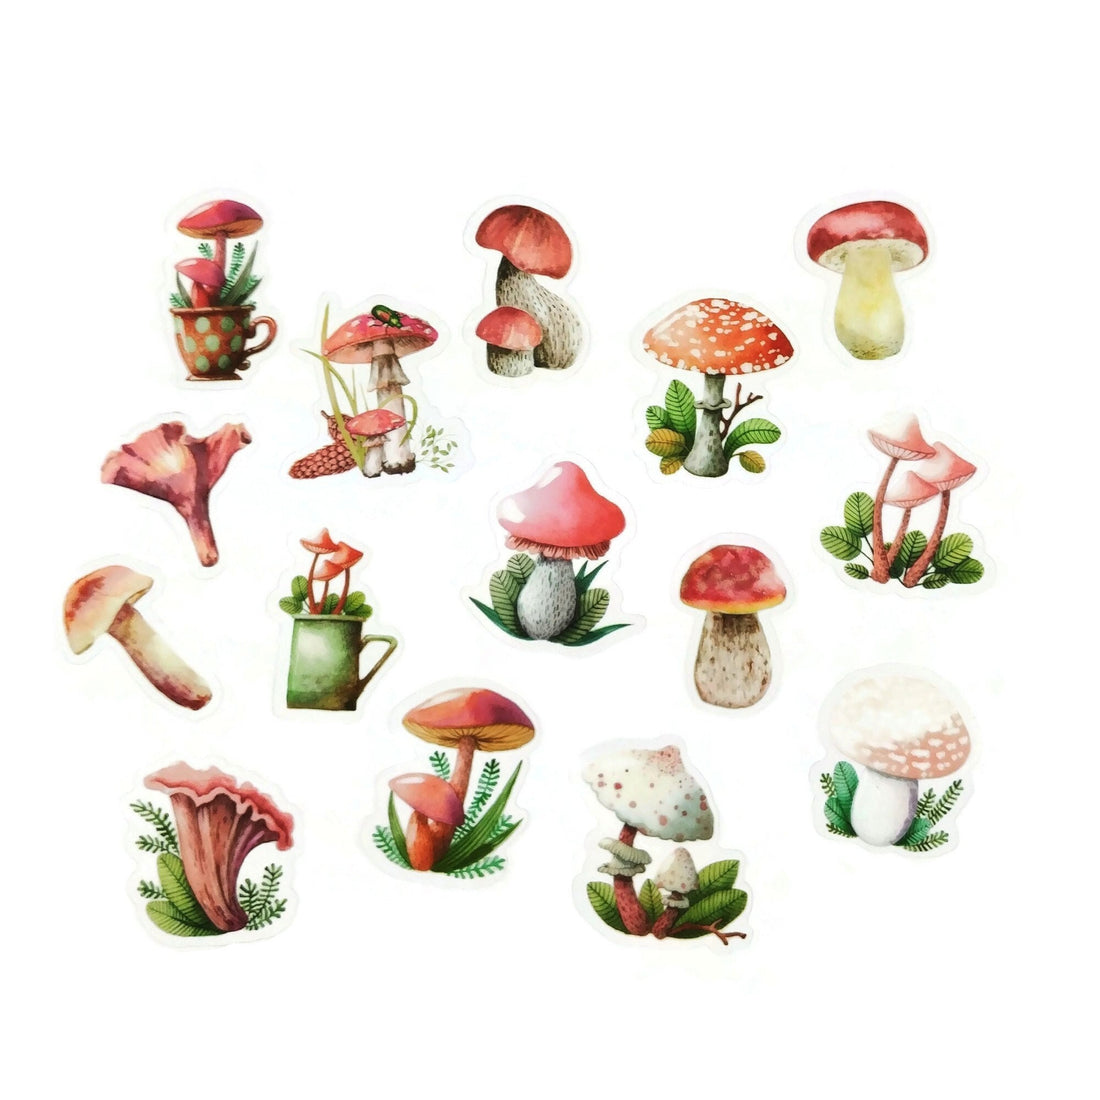 Pinky mushroom sticker pack - 15 cute botanical stickers - Cottagecore journal planner